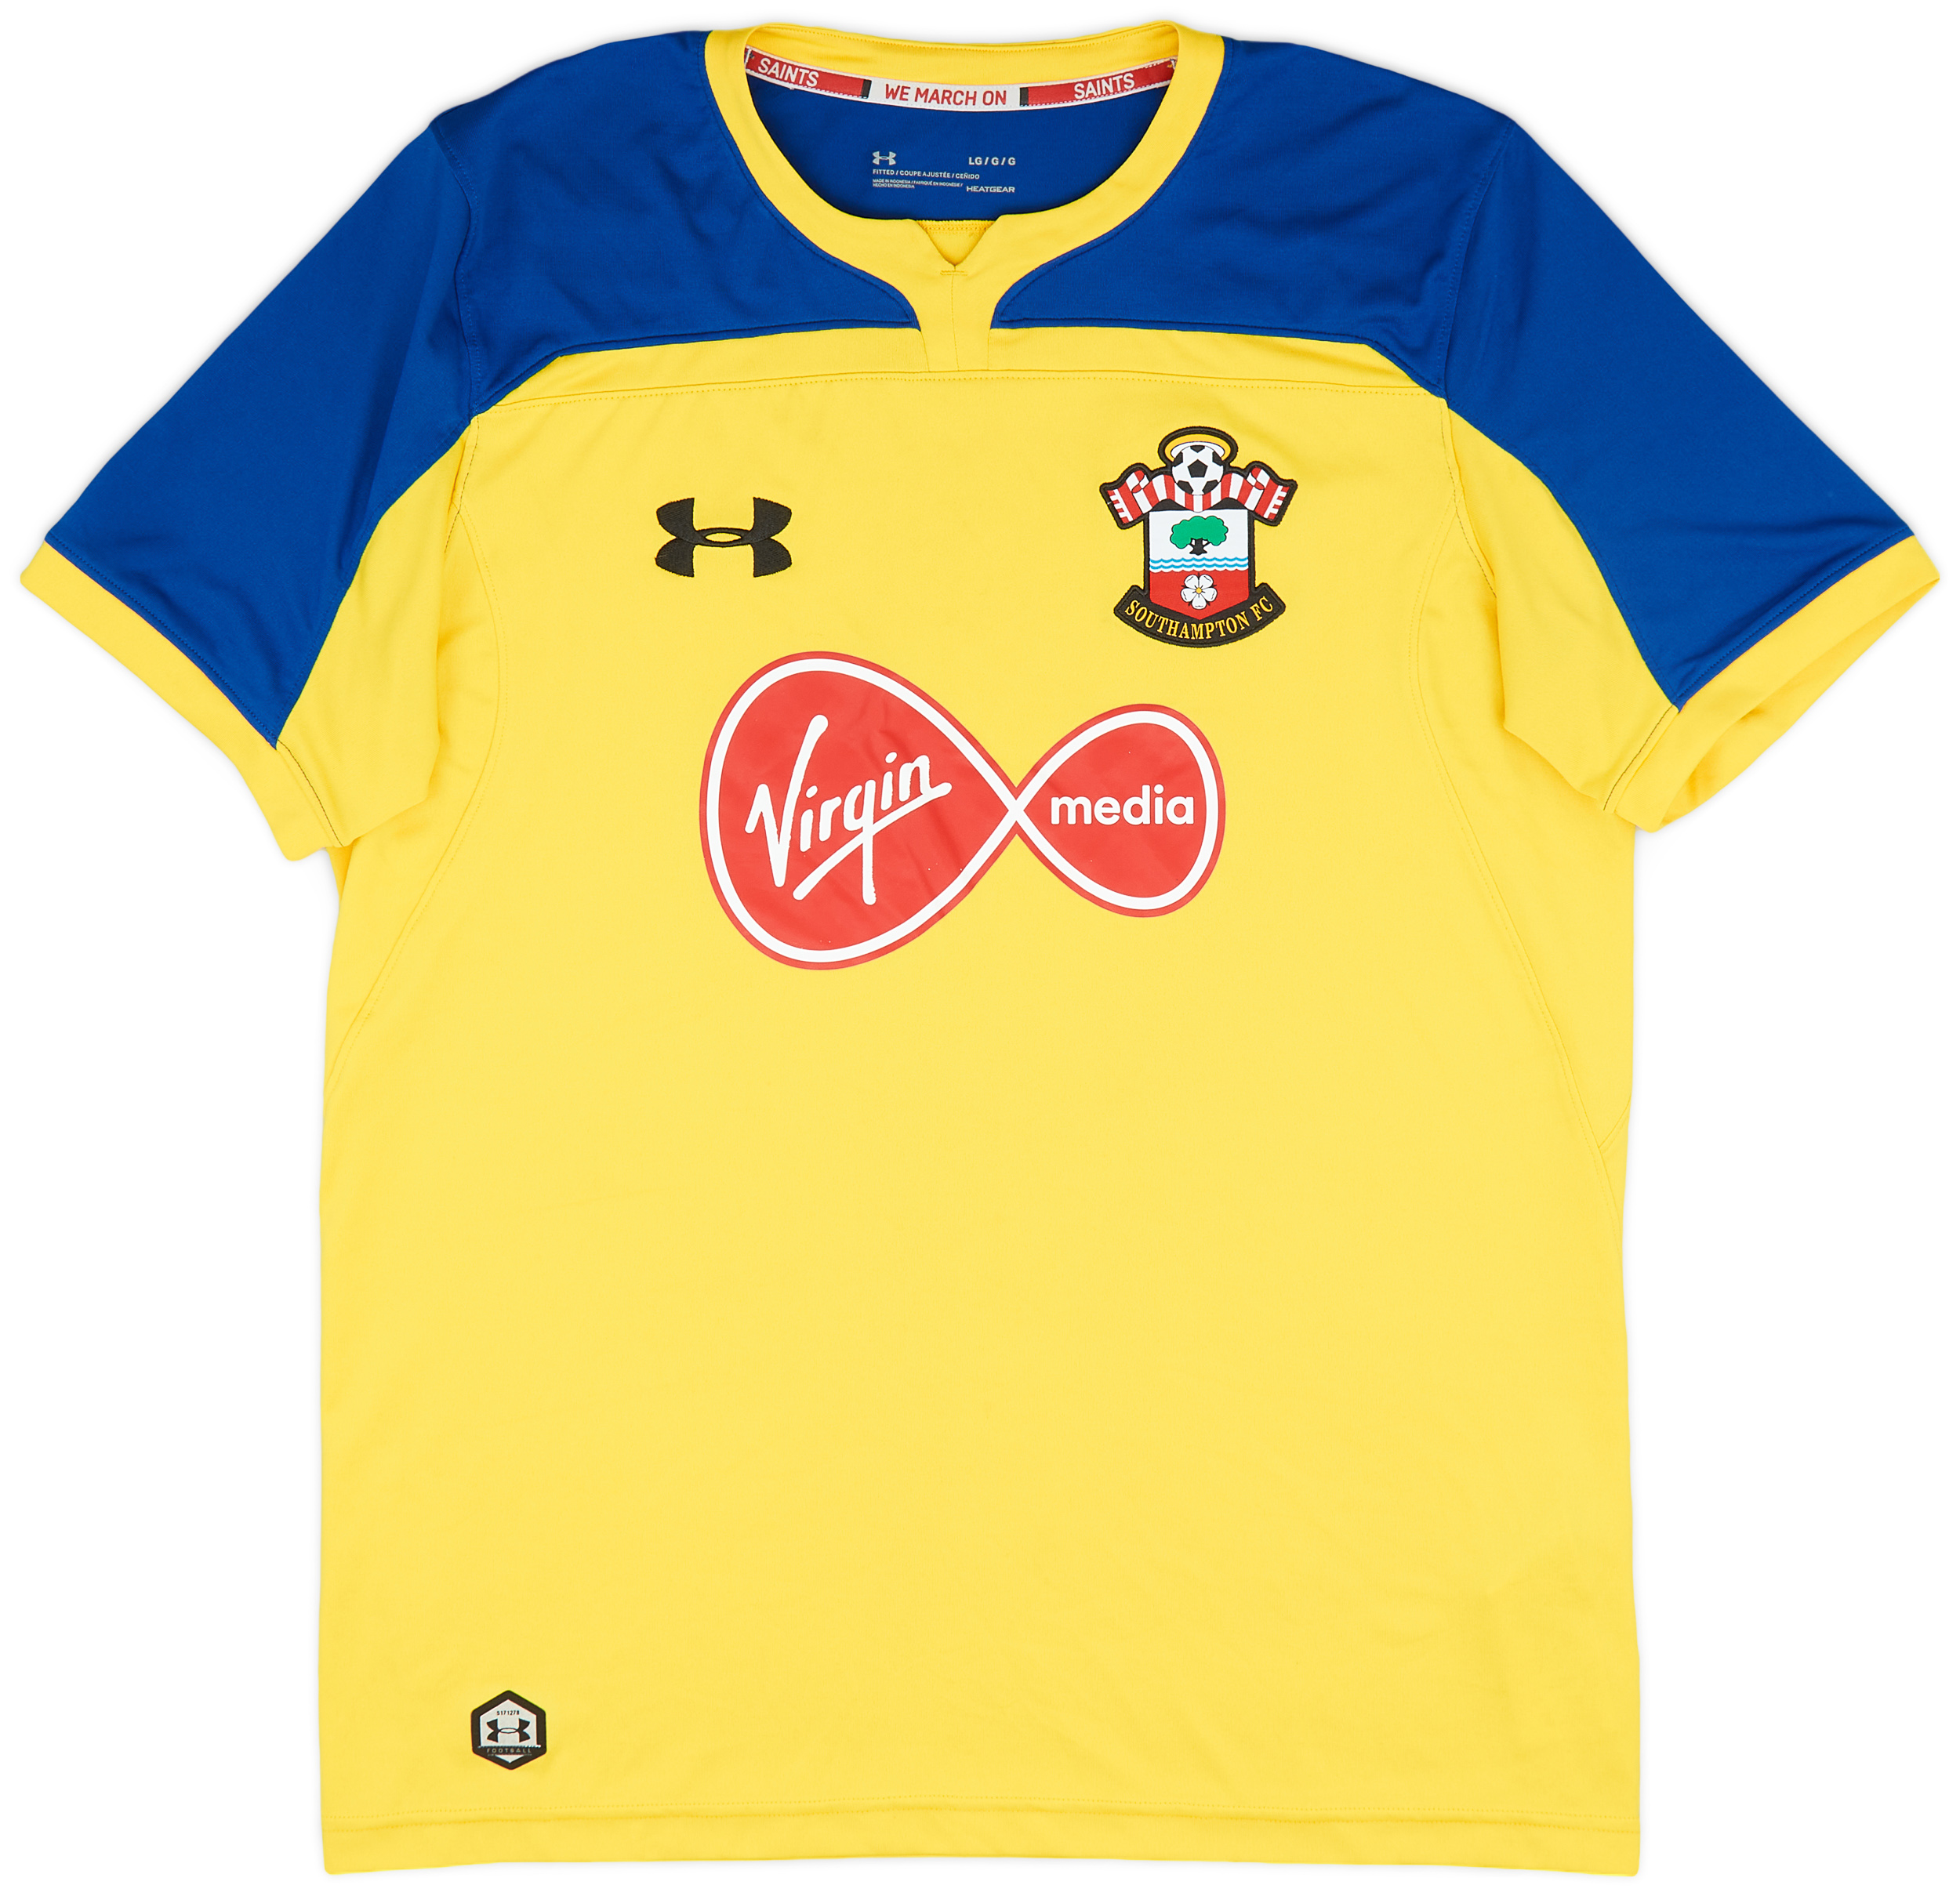 2018-19 Southampton Away Shirt - 8/10 - ()